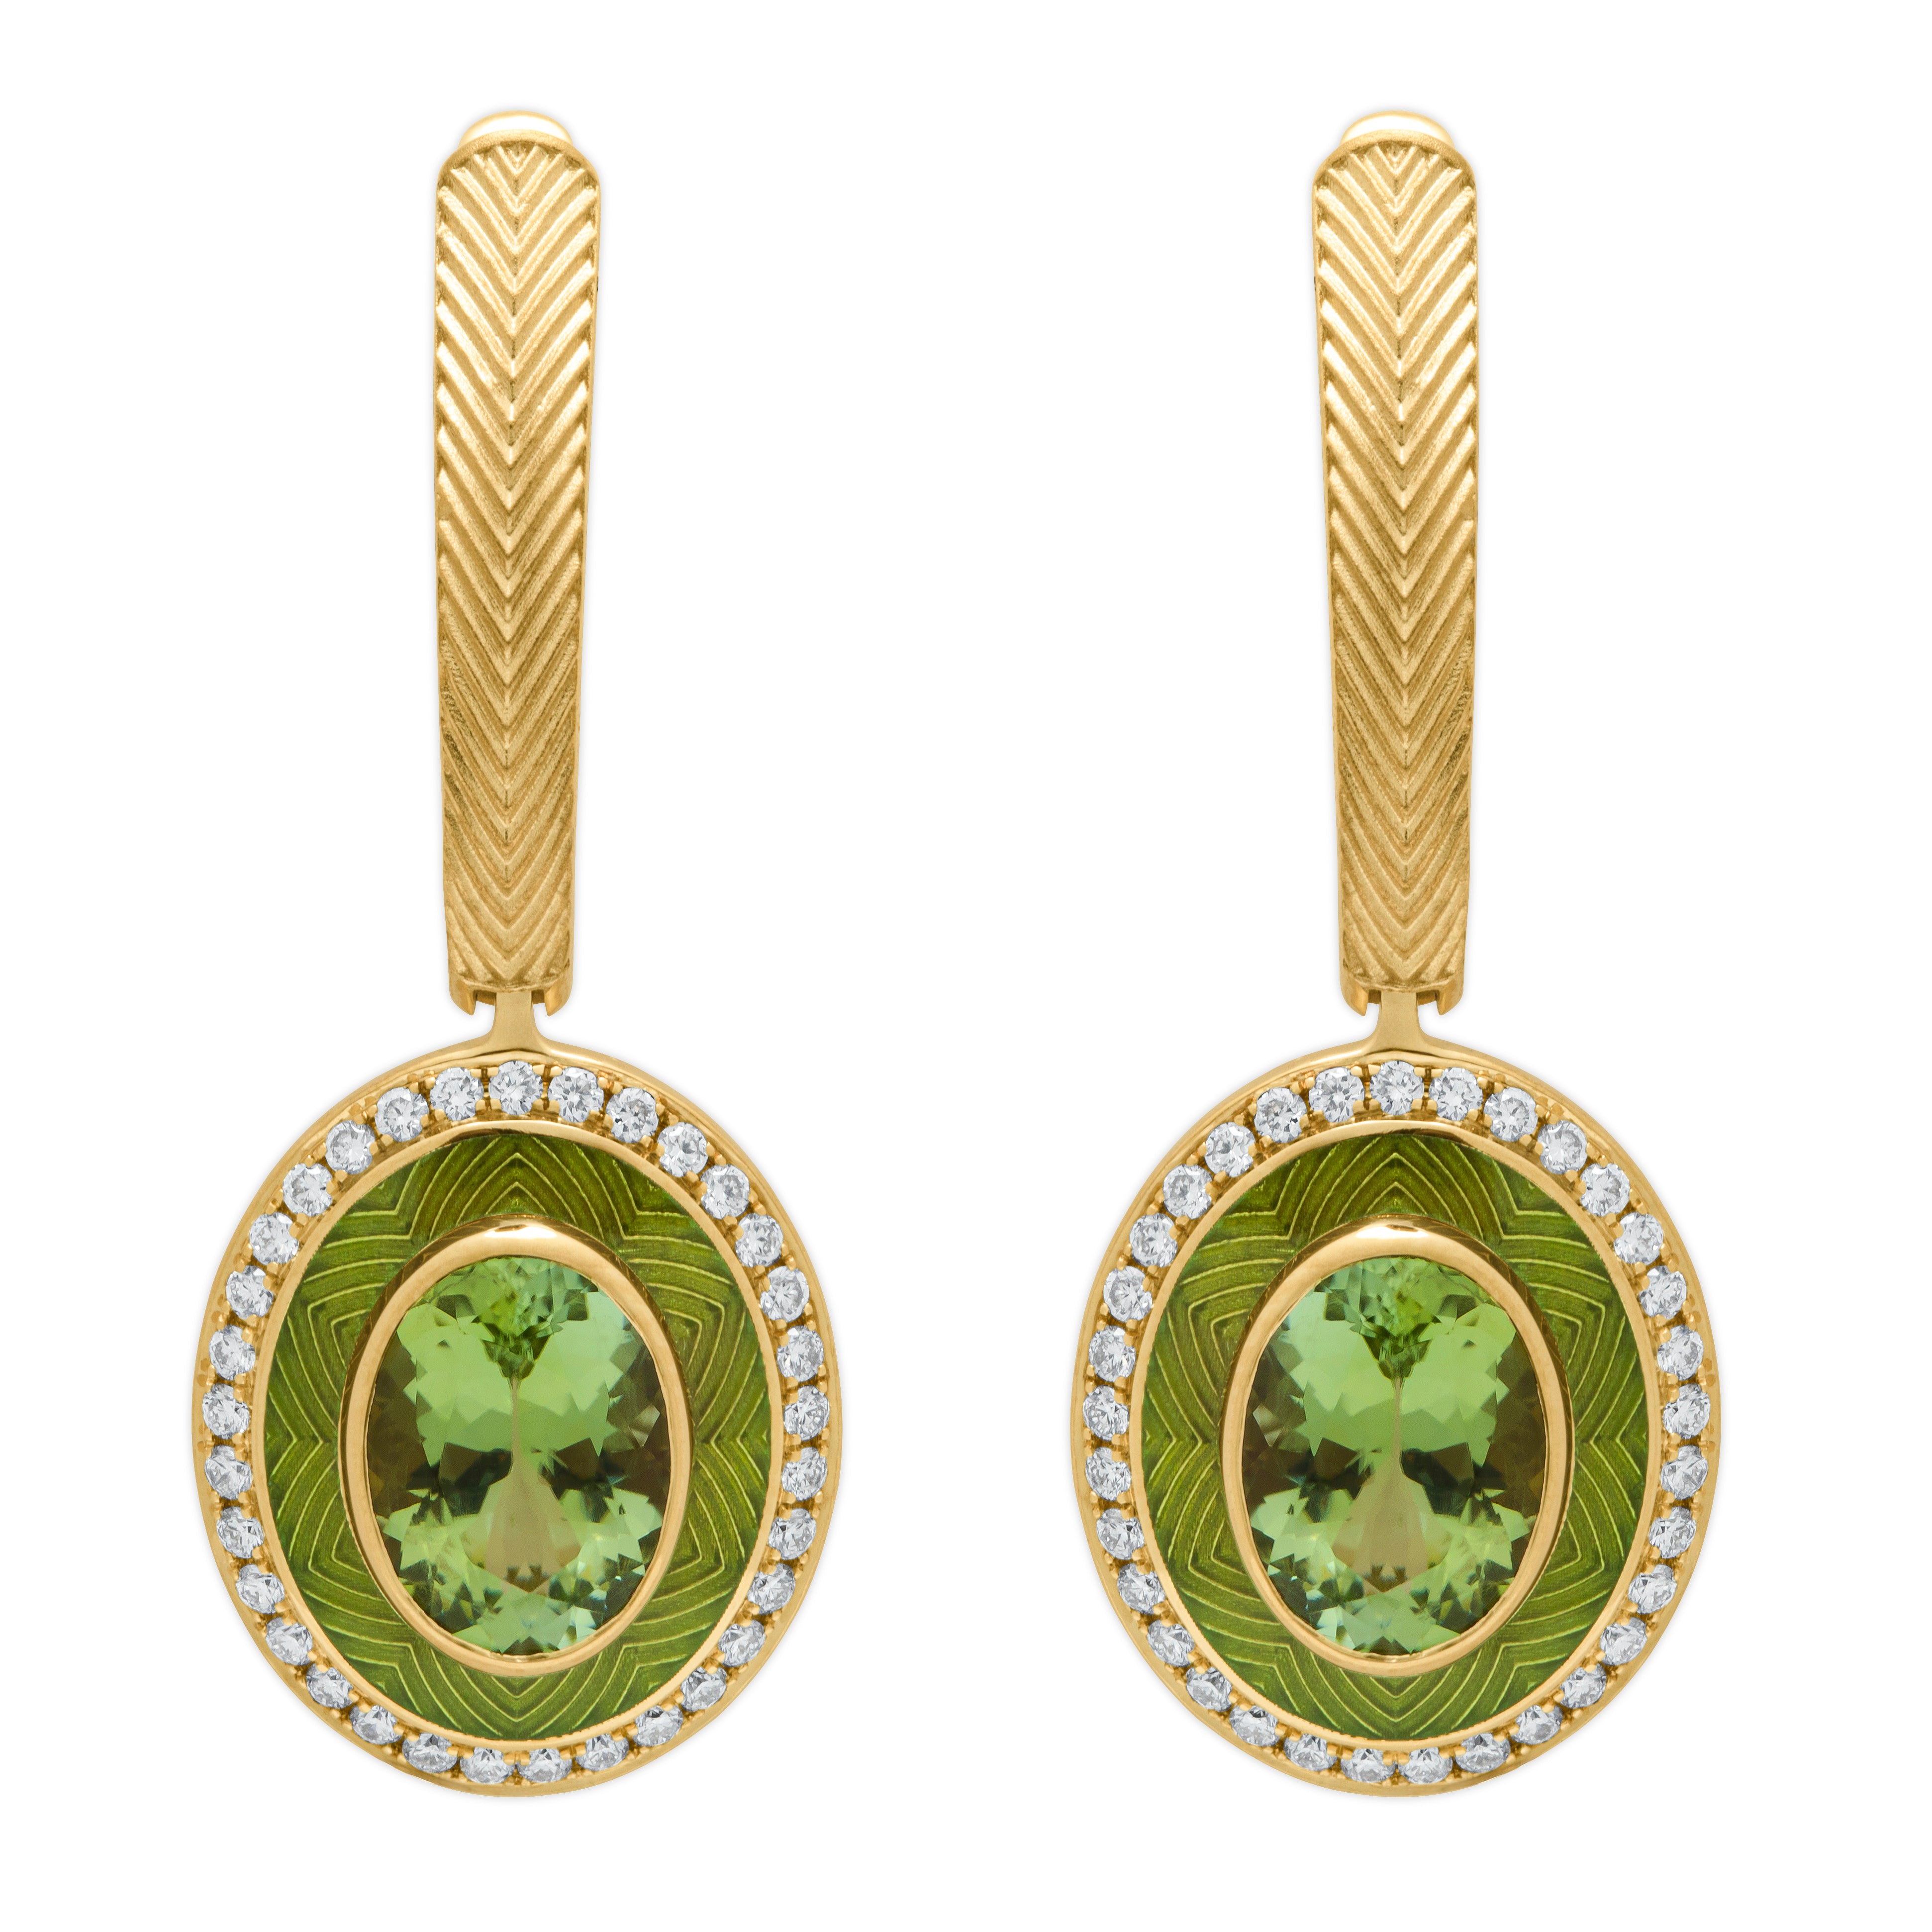 E 0084-3 18K Yellow Gold, Green Tourmaline, Diamonds, Enamel Earrings